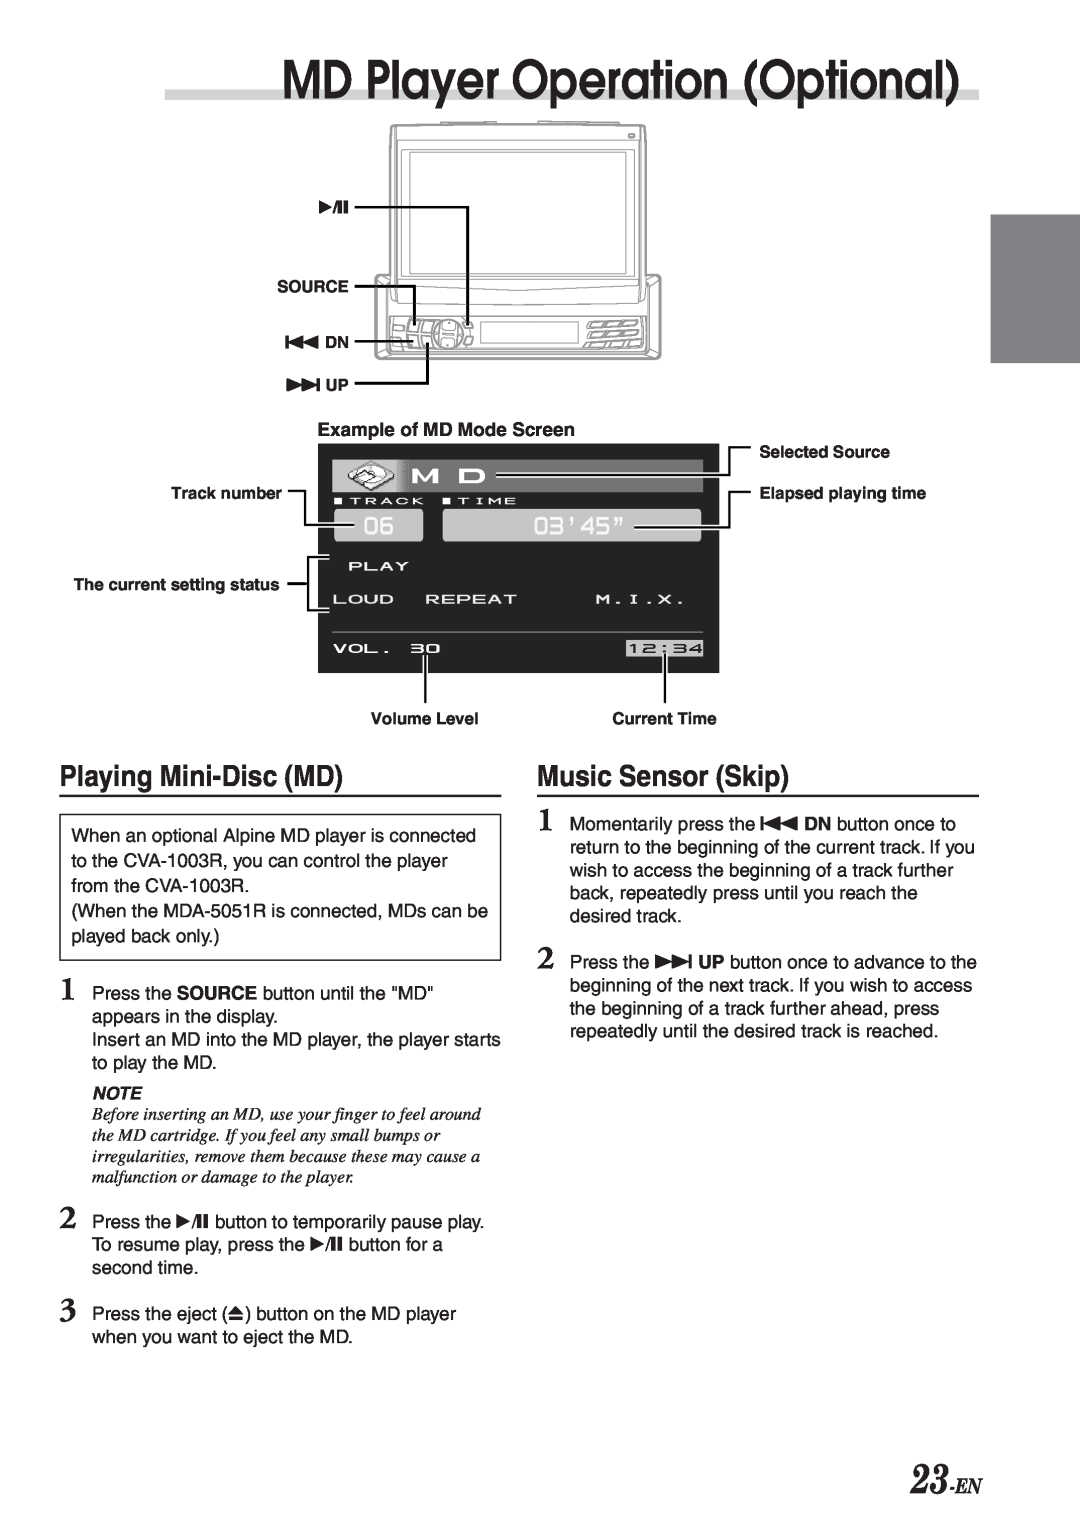 Alpine CVA-1003R MD Player Operation Optional, Playing Mini-DiscMD, 23-EN, Music Sensor Skip, Example of MD Mode Screen 